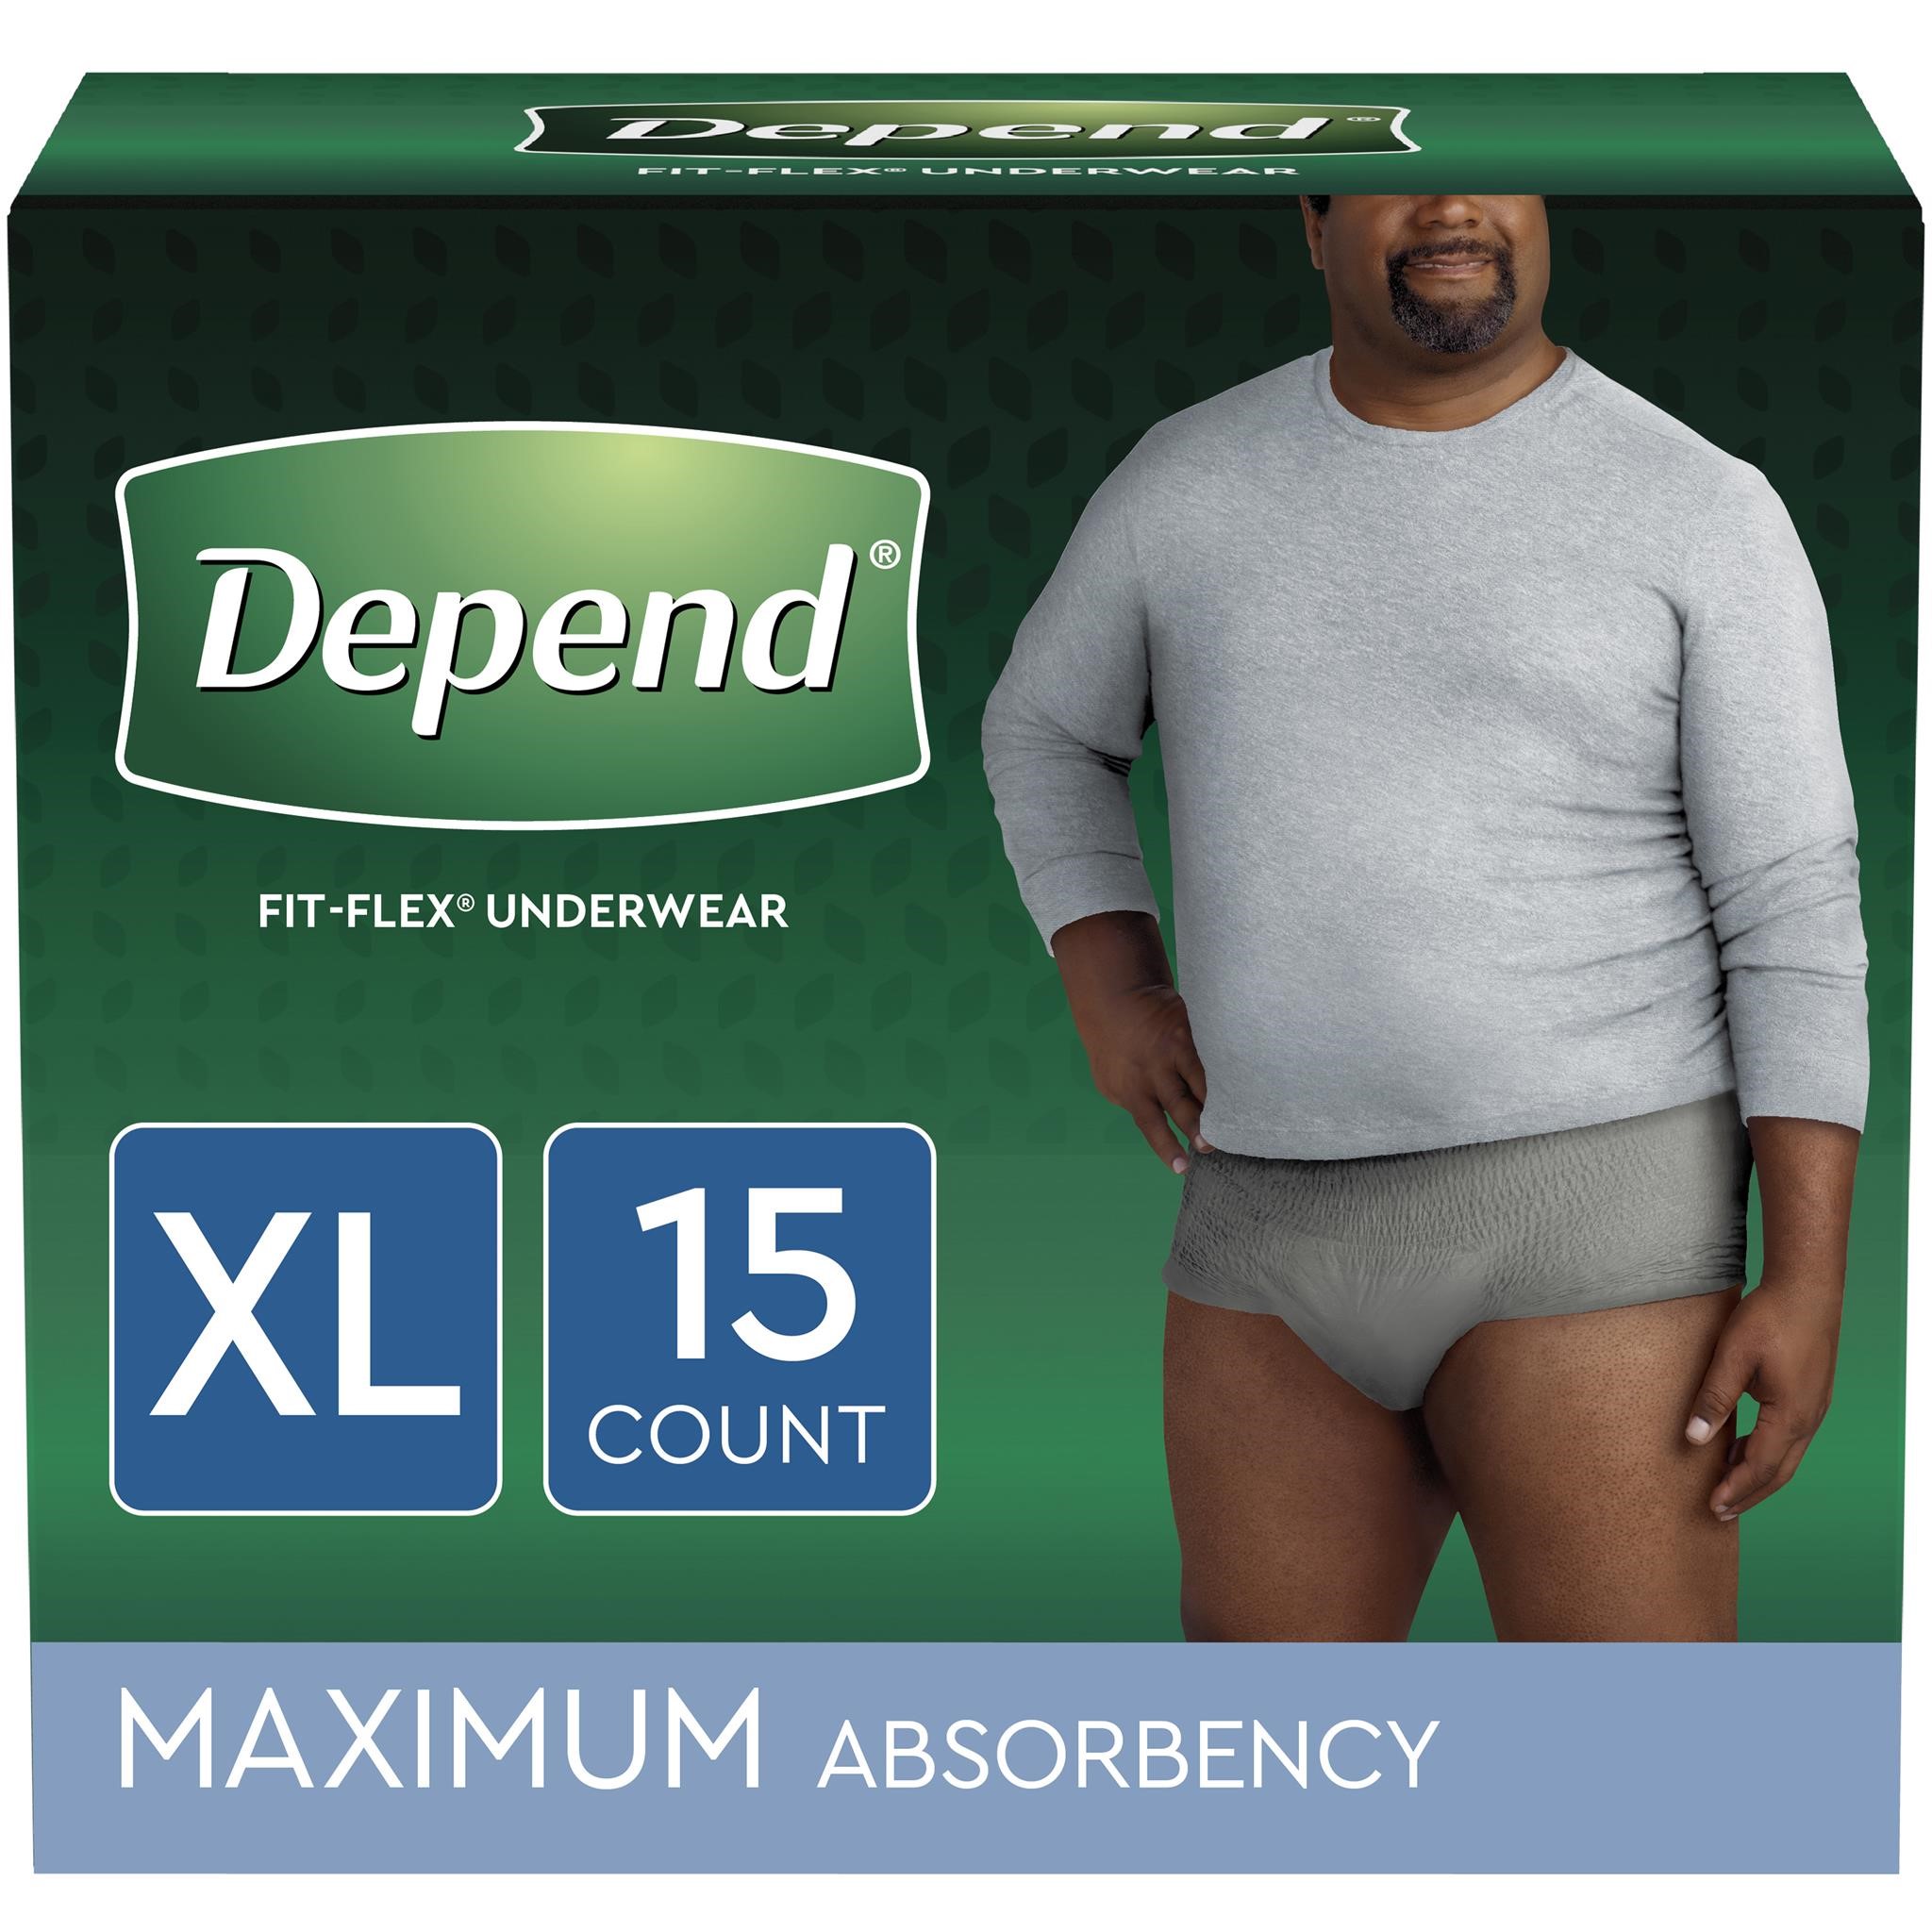 Depend FIT-FLEX Incontinence Underwear for Men Max